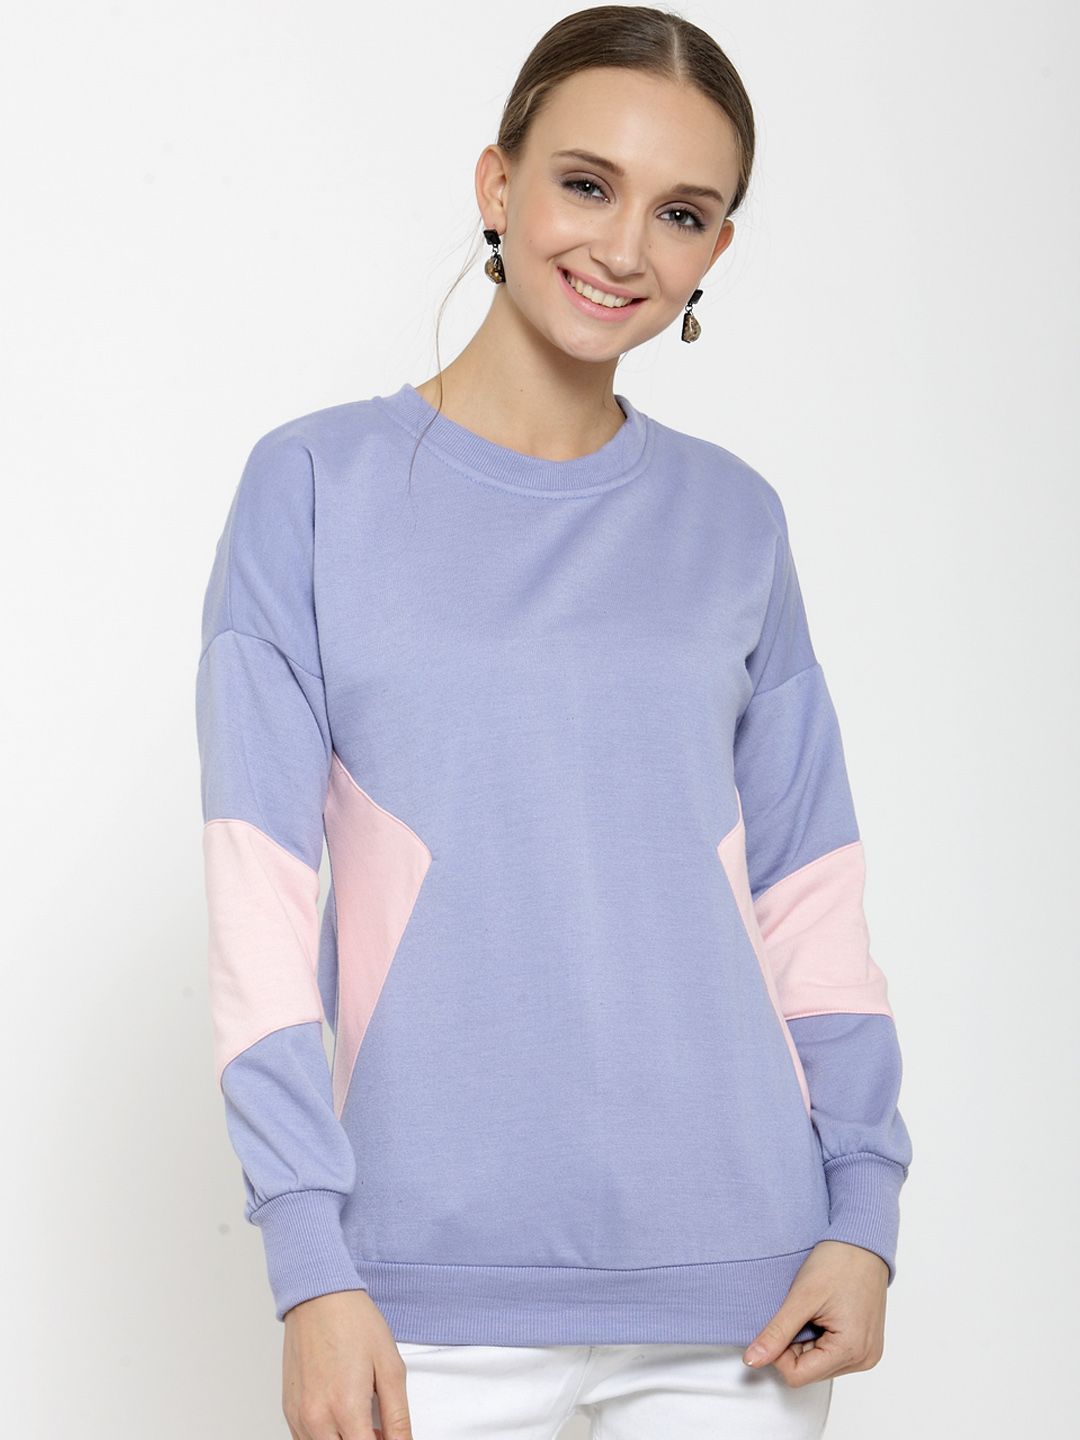 Belle Fille Women Blue & Pink Colourblocked Sweatshirt Price in India